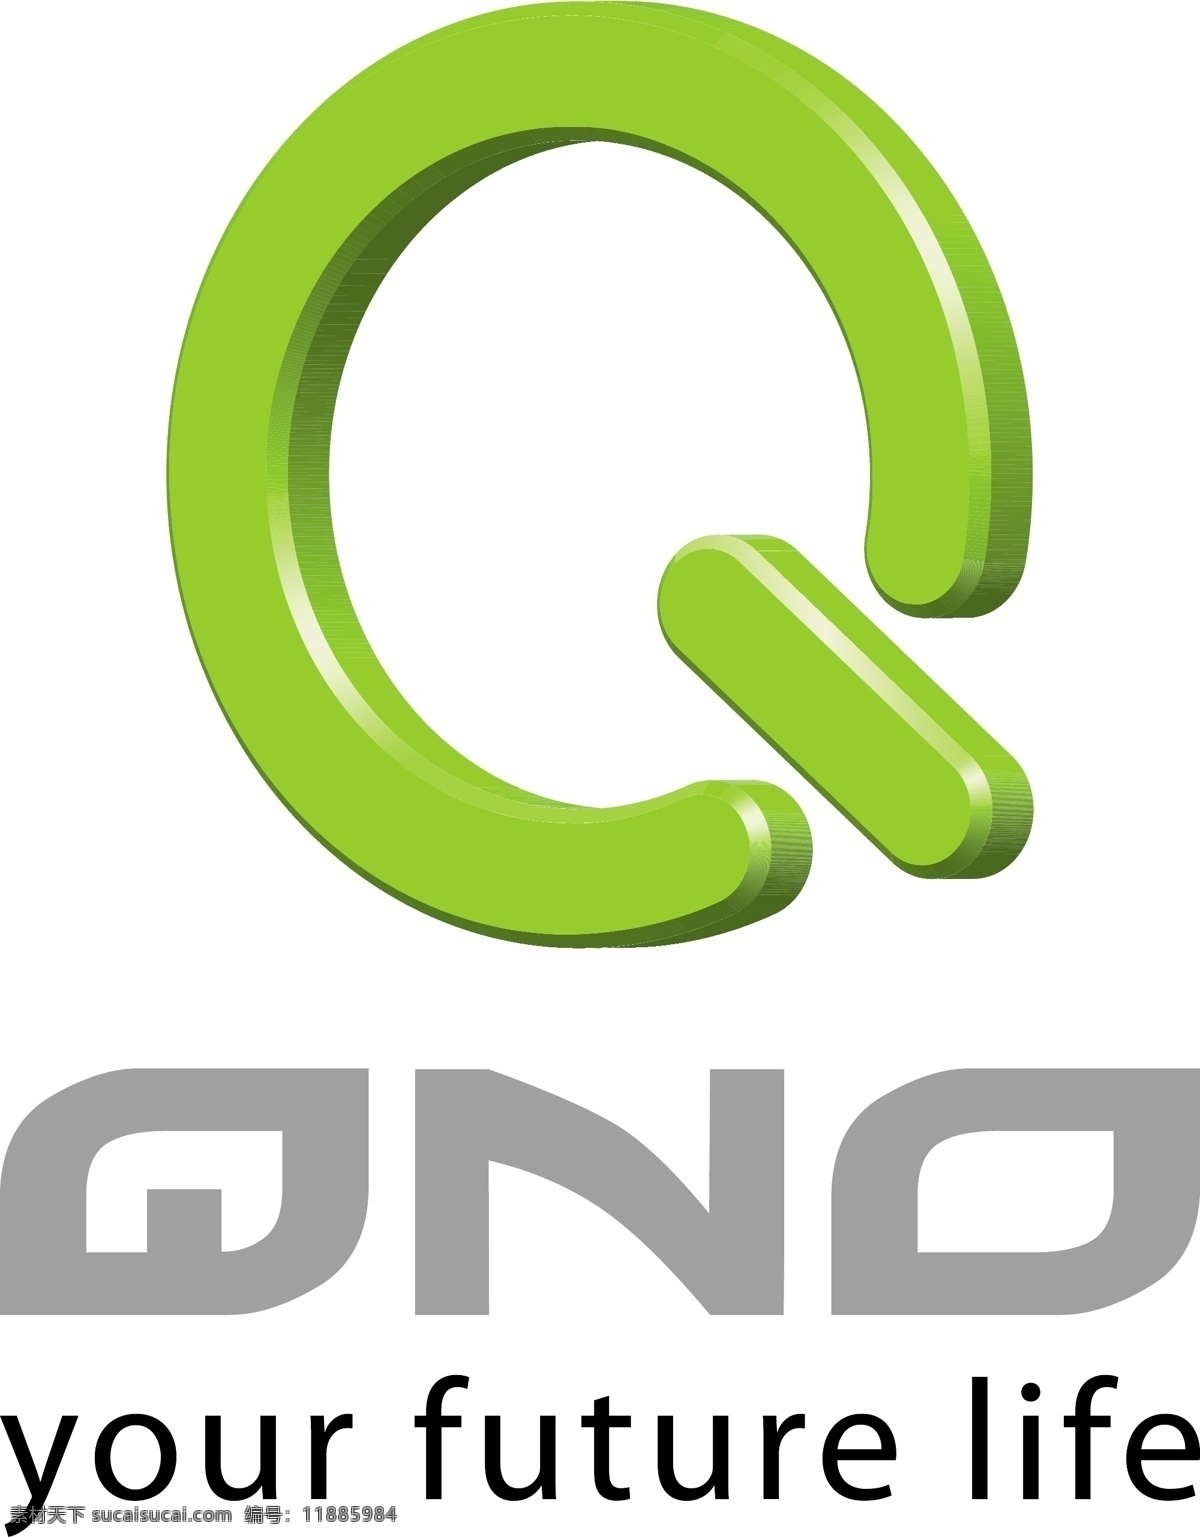 qno logo大全 logo 设计欣赏 商业矢量 矢量下载 软件公司 标志设计 欣赏 网页矢量 矢量图 其他矢量图